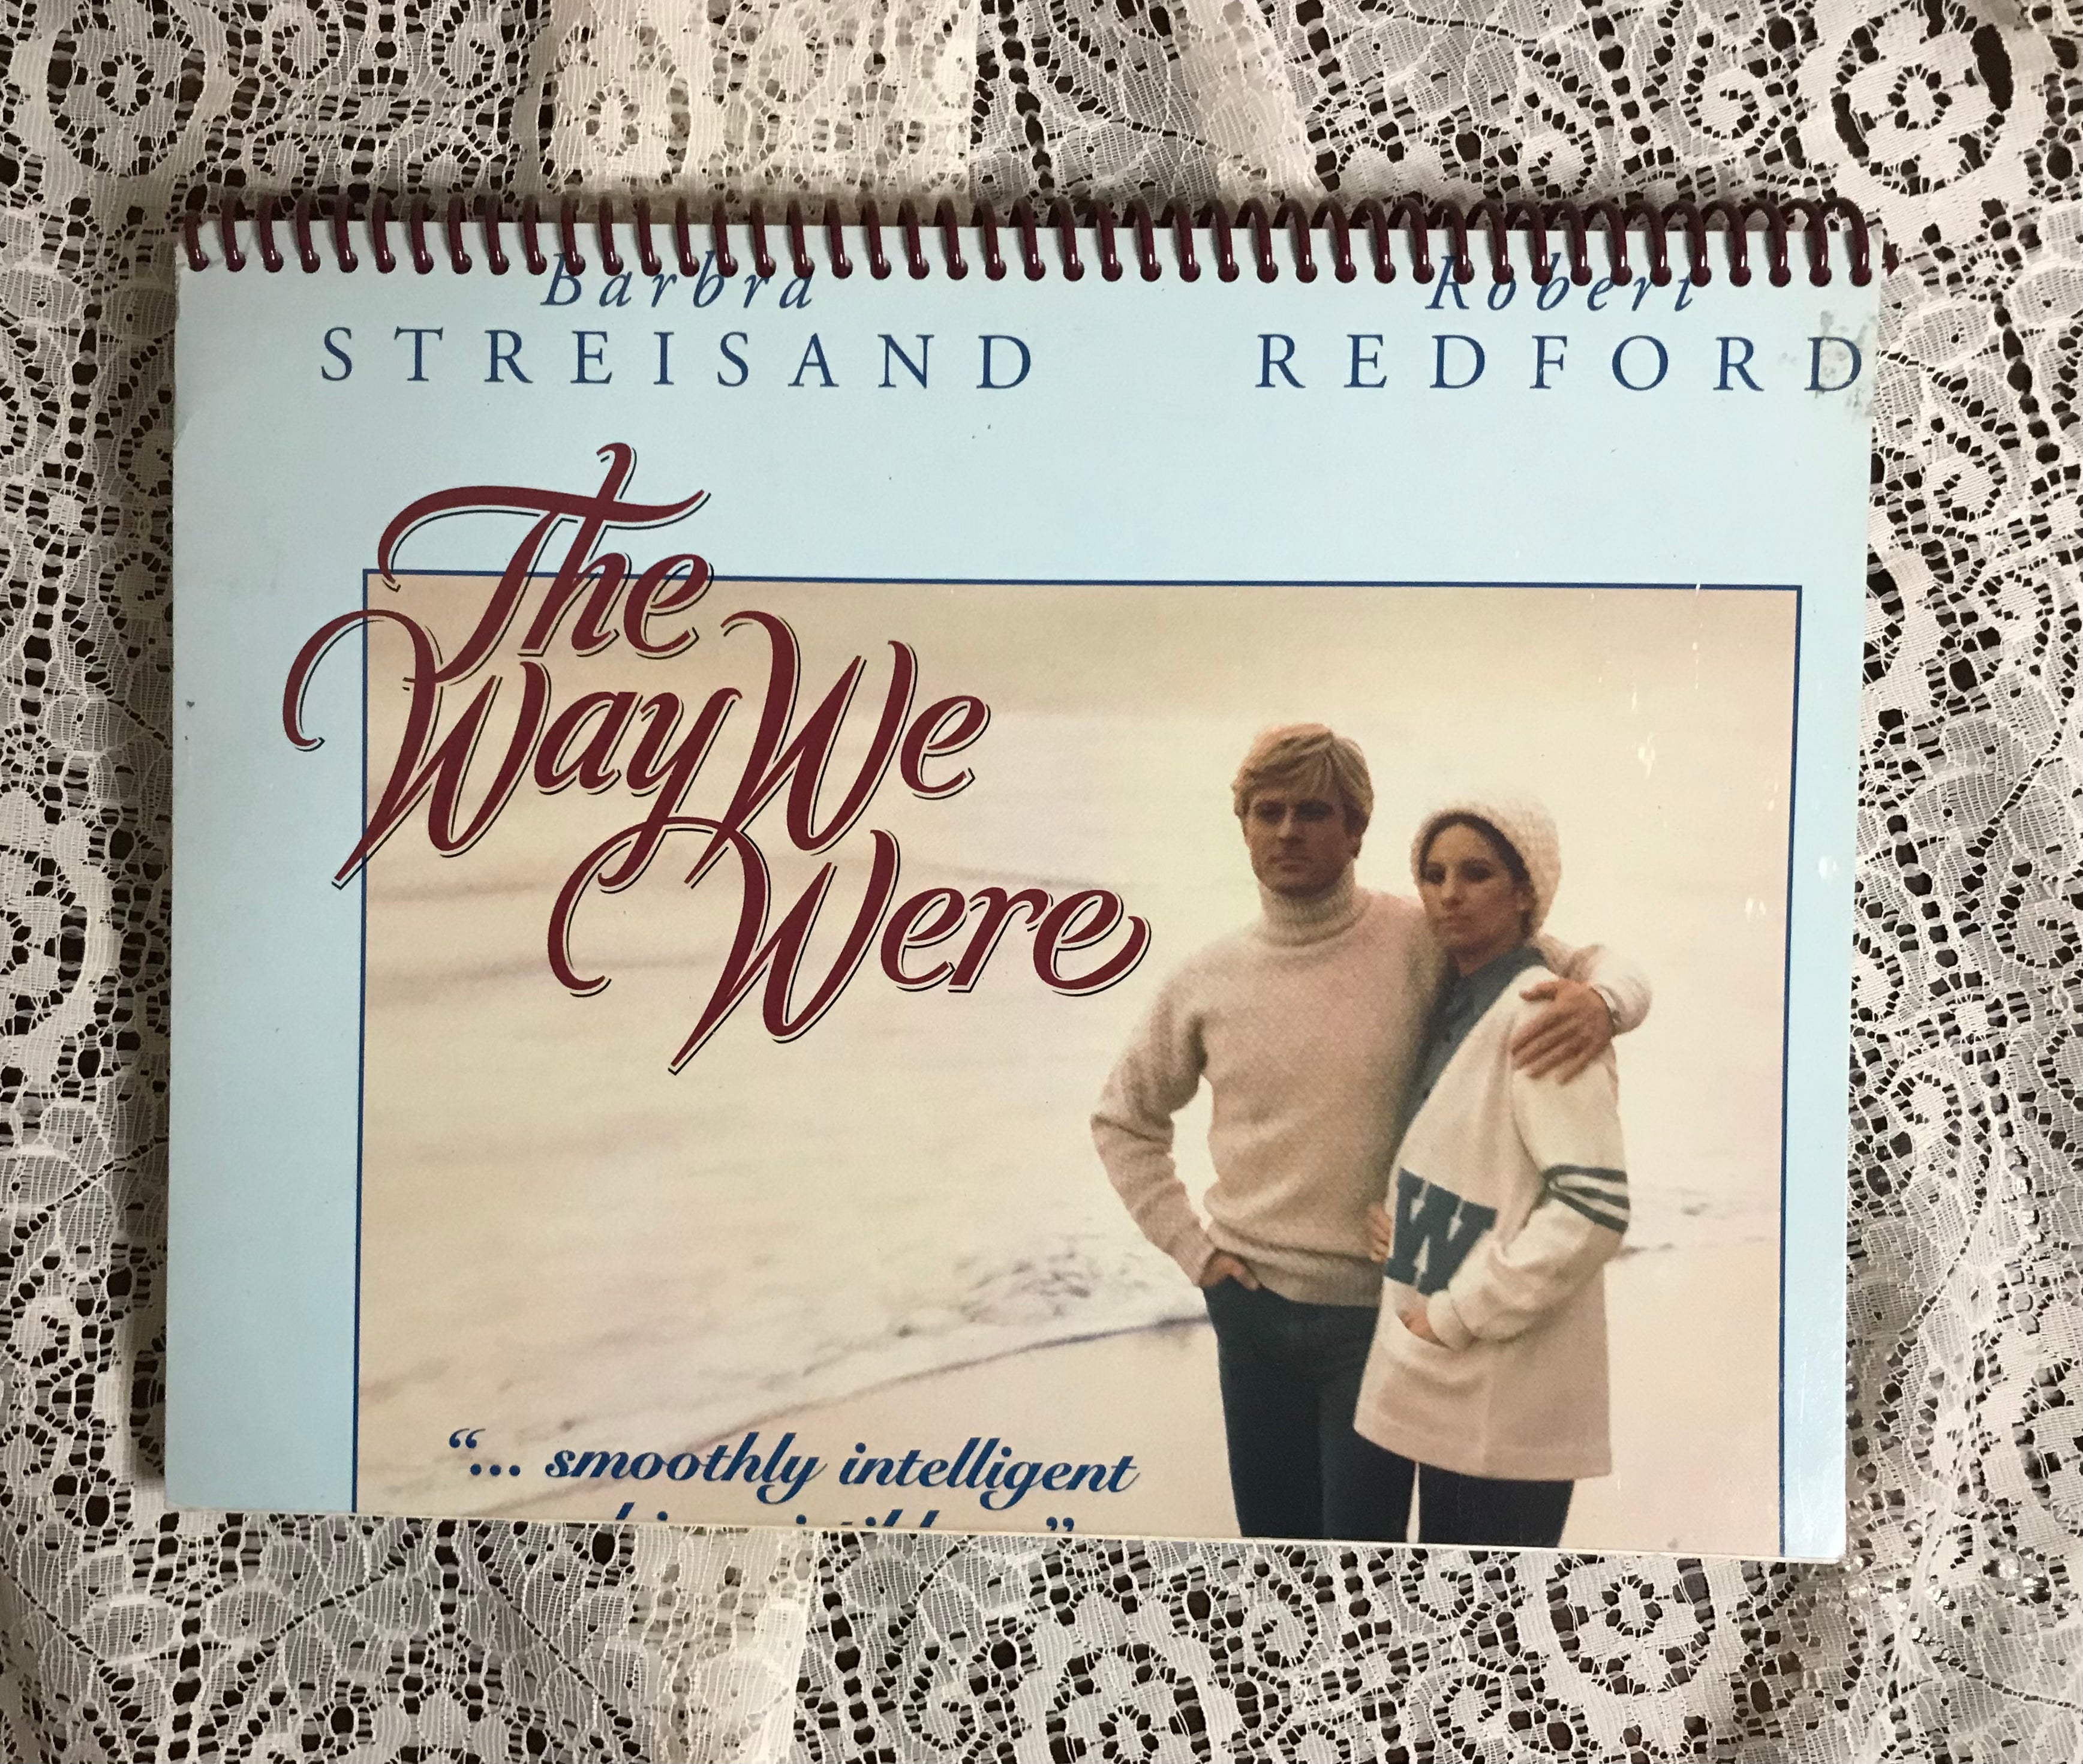 Barbra Streisand / Robert Redford The Way We Were Album Cover Notebook